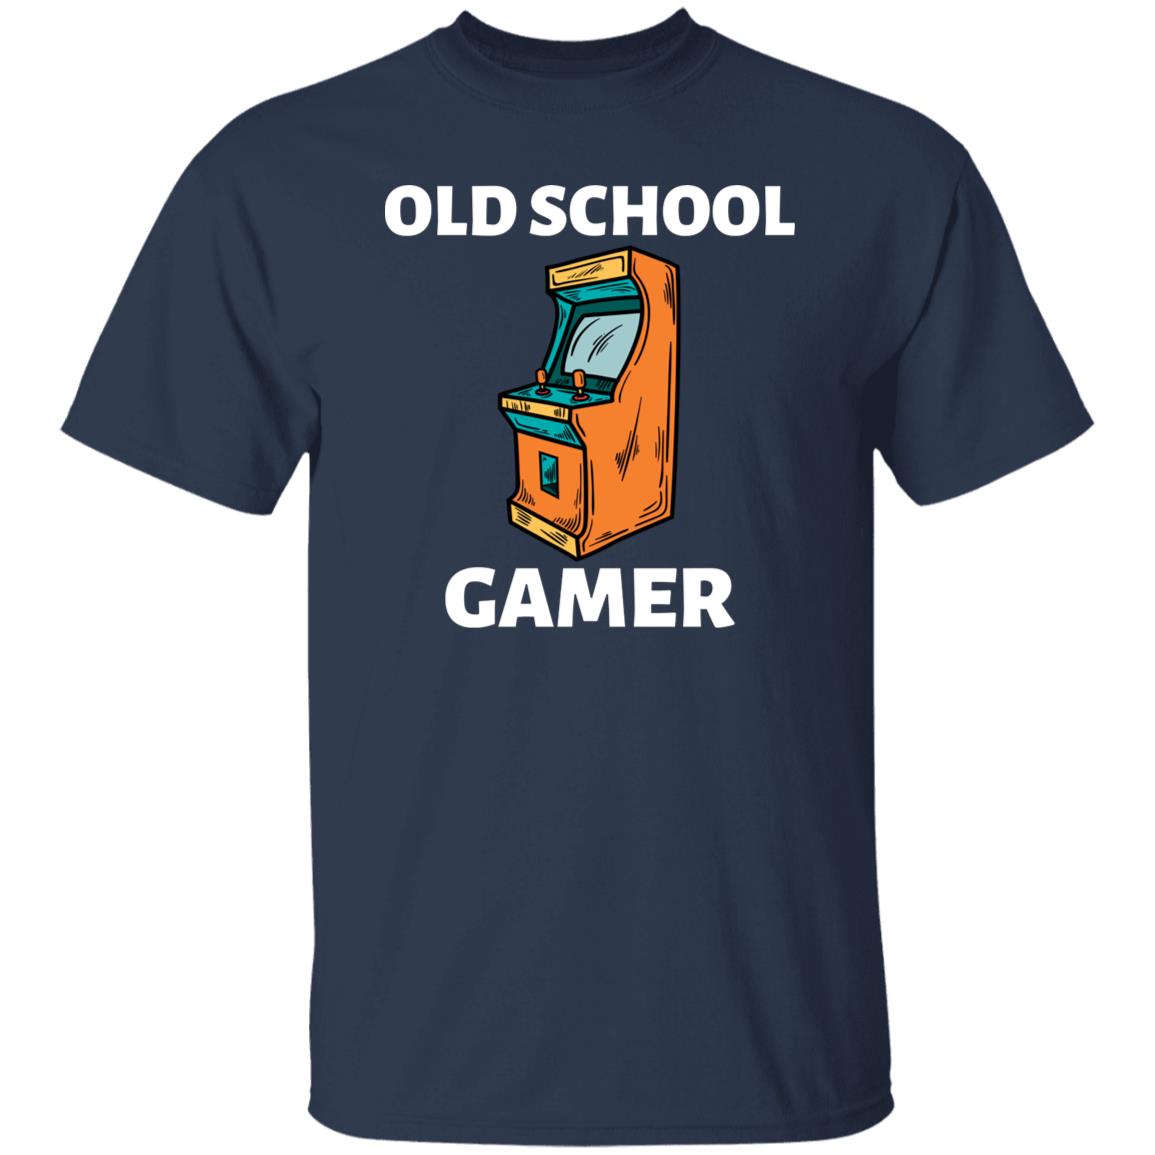 Old School Gamer Shirt, Gamer T-shirt, O.G. Old School Gamer t-shirt